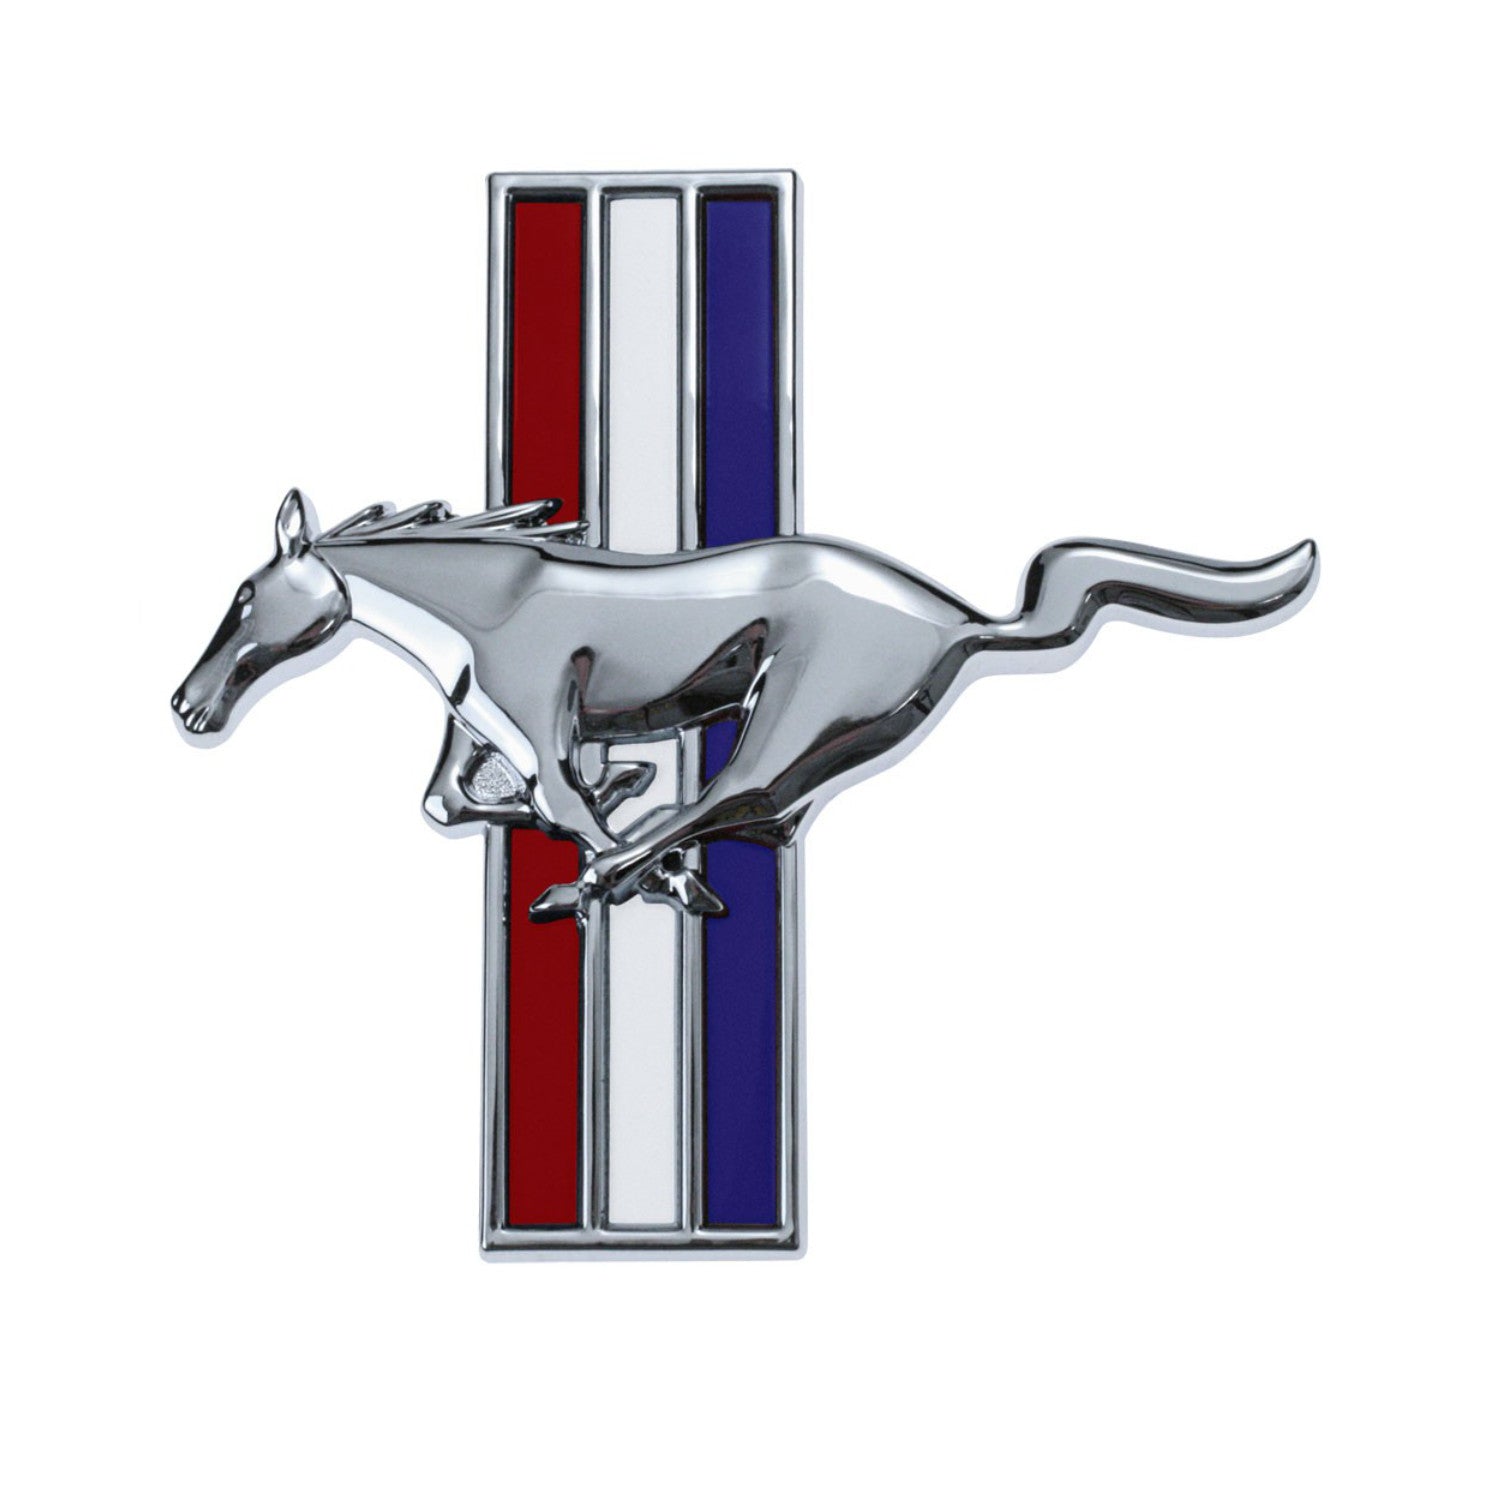 Ford Tribar Pony Running Horse Badge Emblem LH